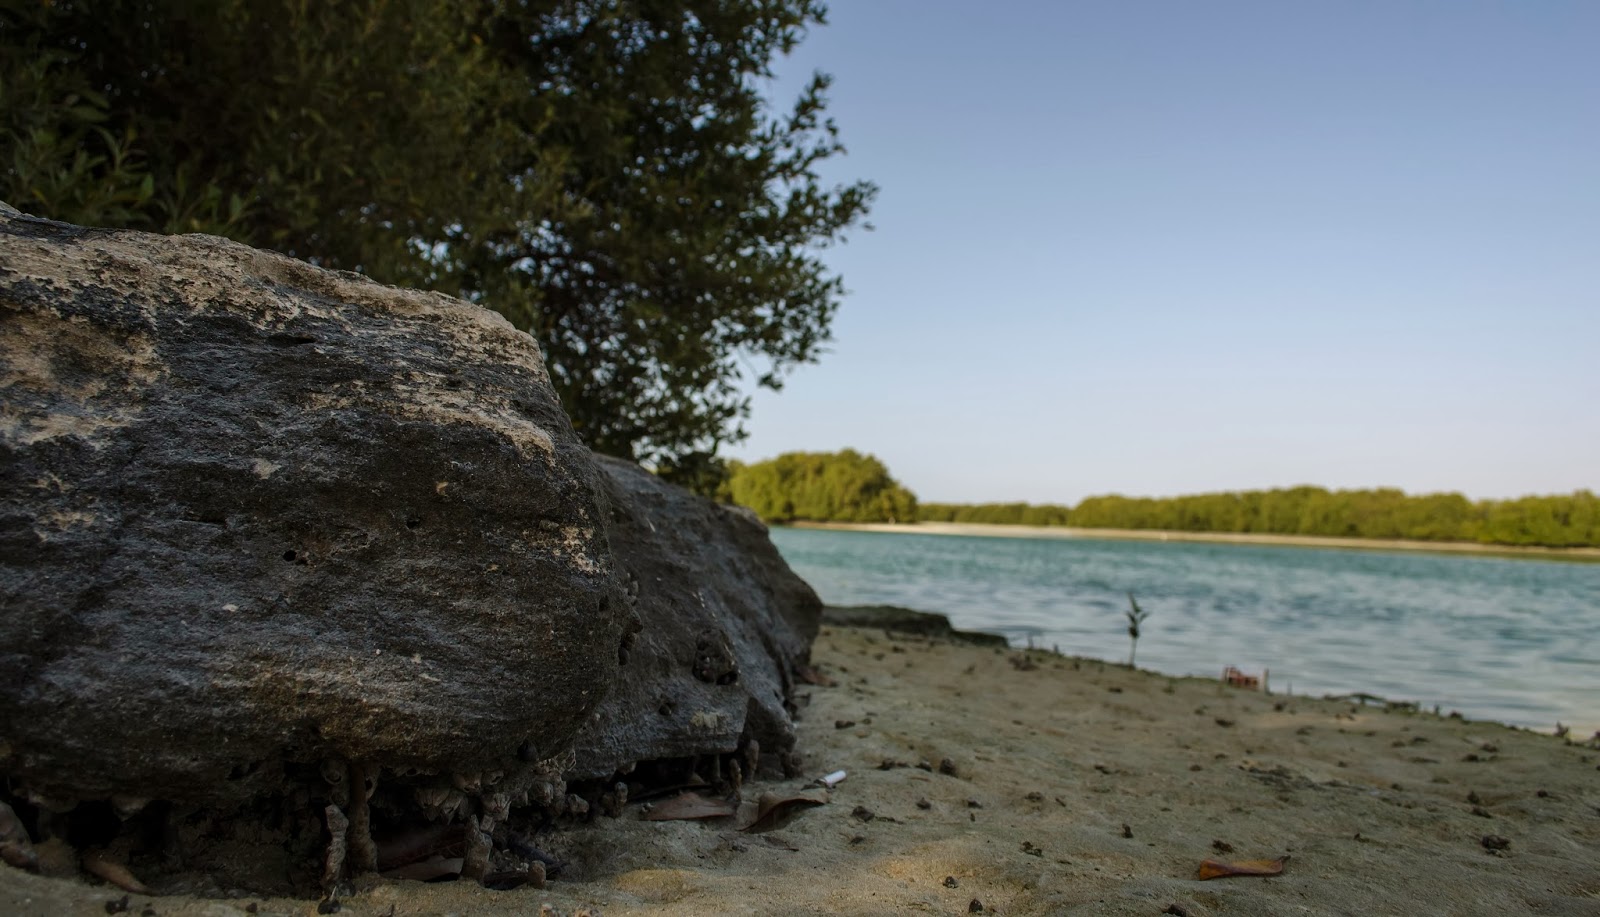 Abu Dhabi Mangroves stones